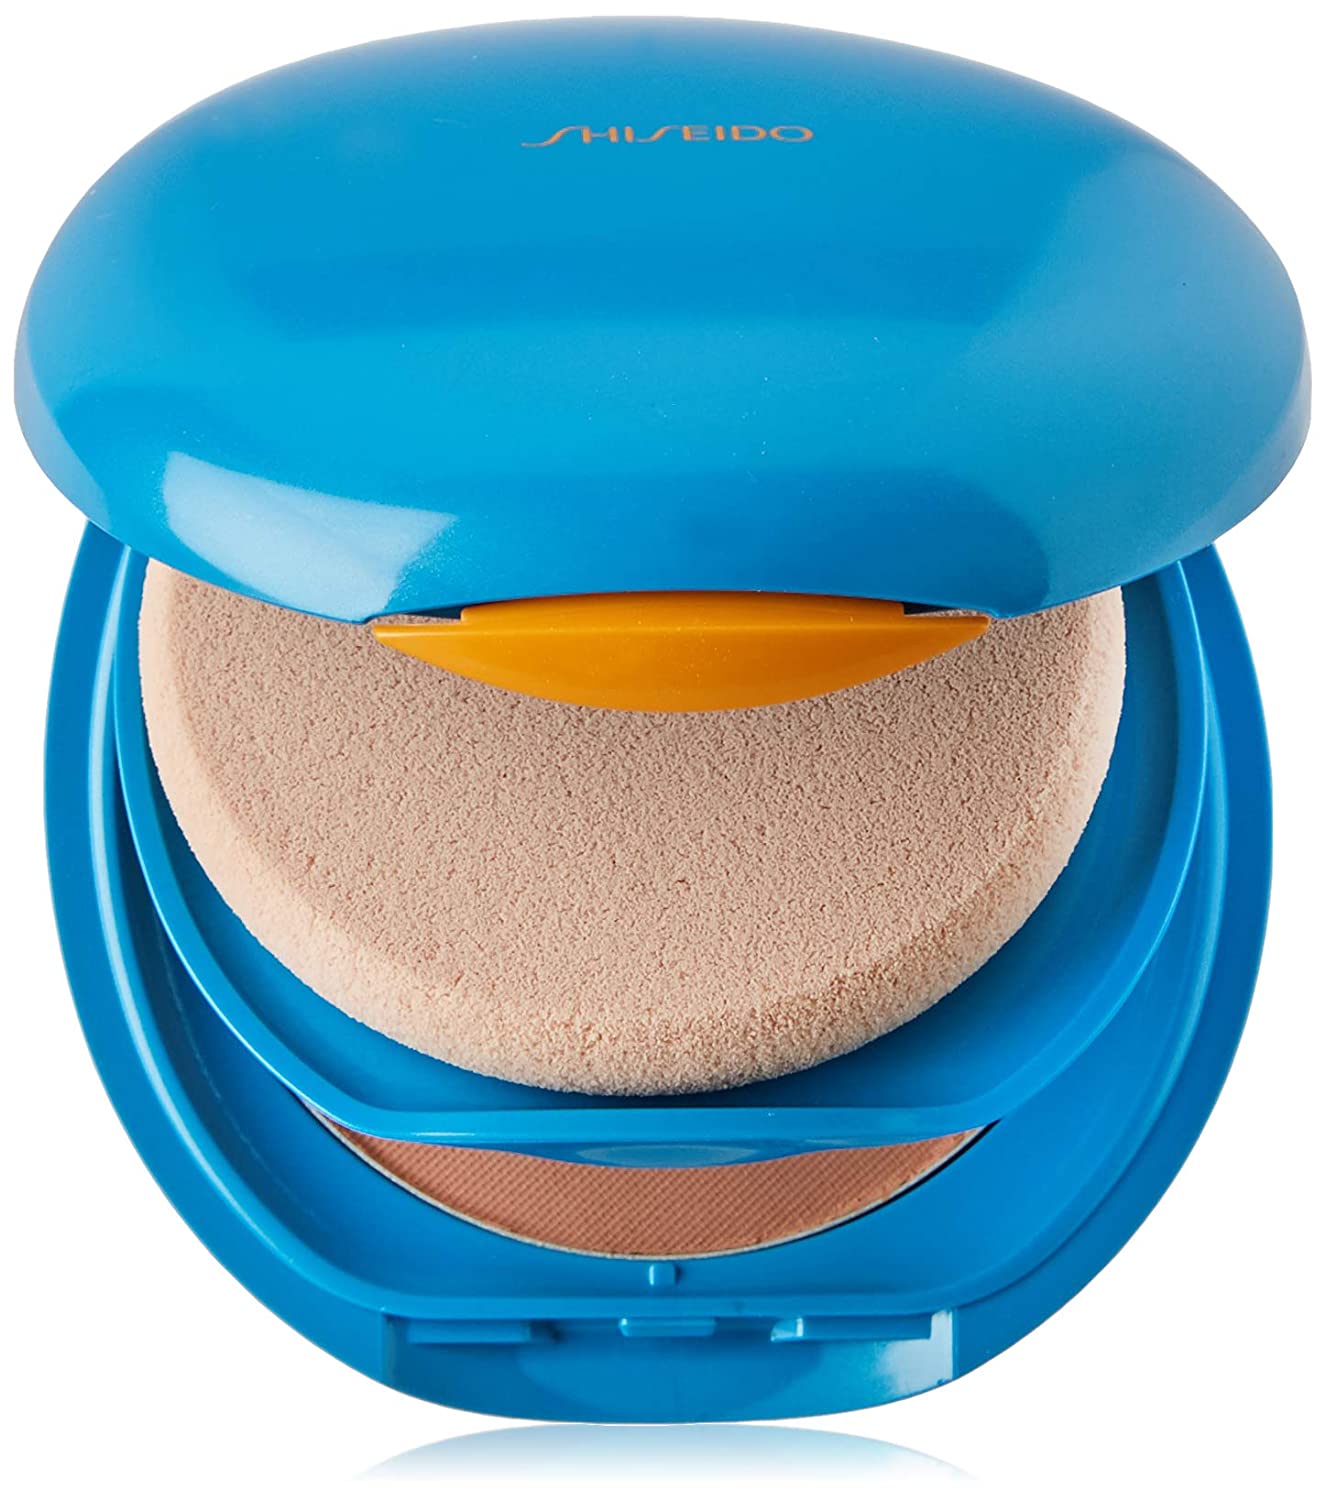 Shiseido KS40293 Sun Protective Compact Foundation SPF 30 Unisex Sun Makeup 12 g Pack of 1 x 0.083 kg